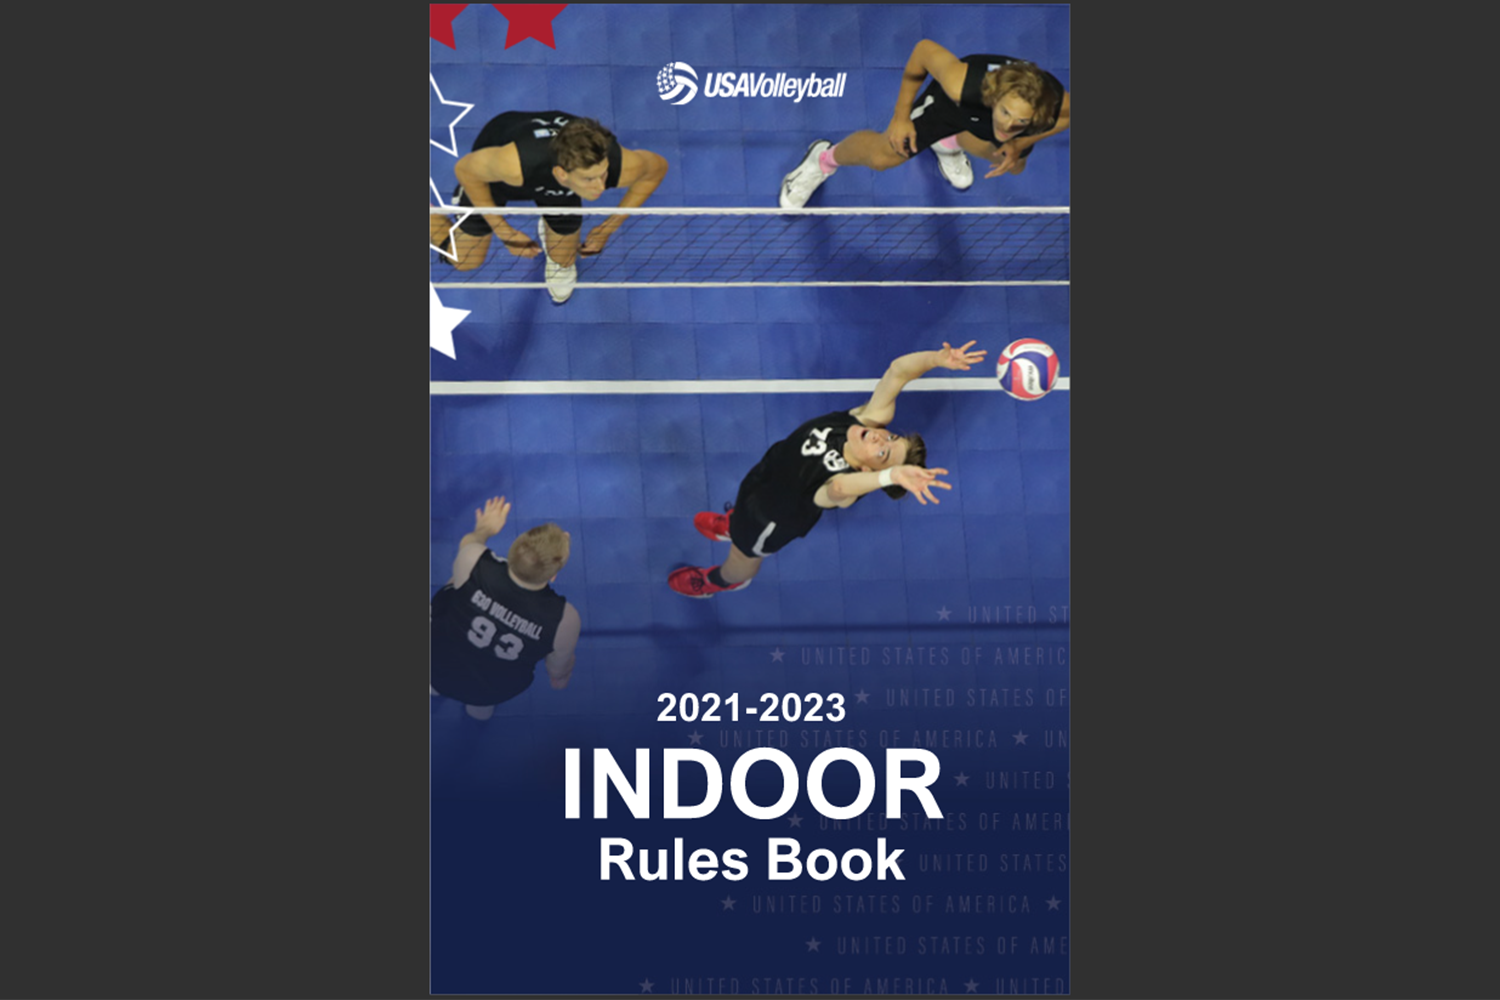 The 2021-23 USA Volleyball Indoor Rulebook